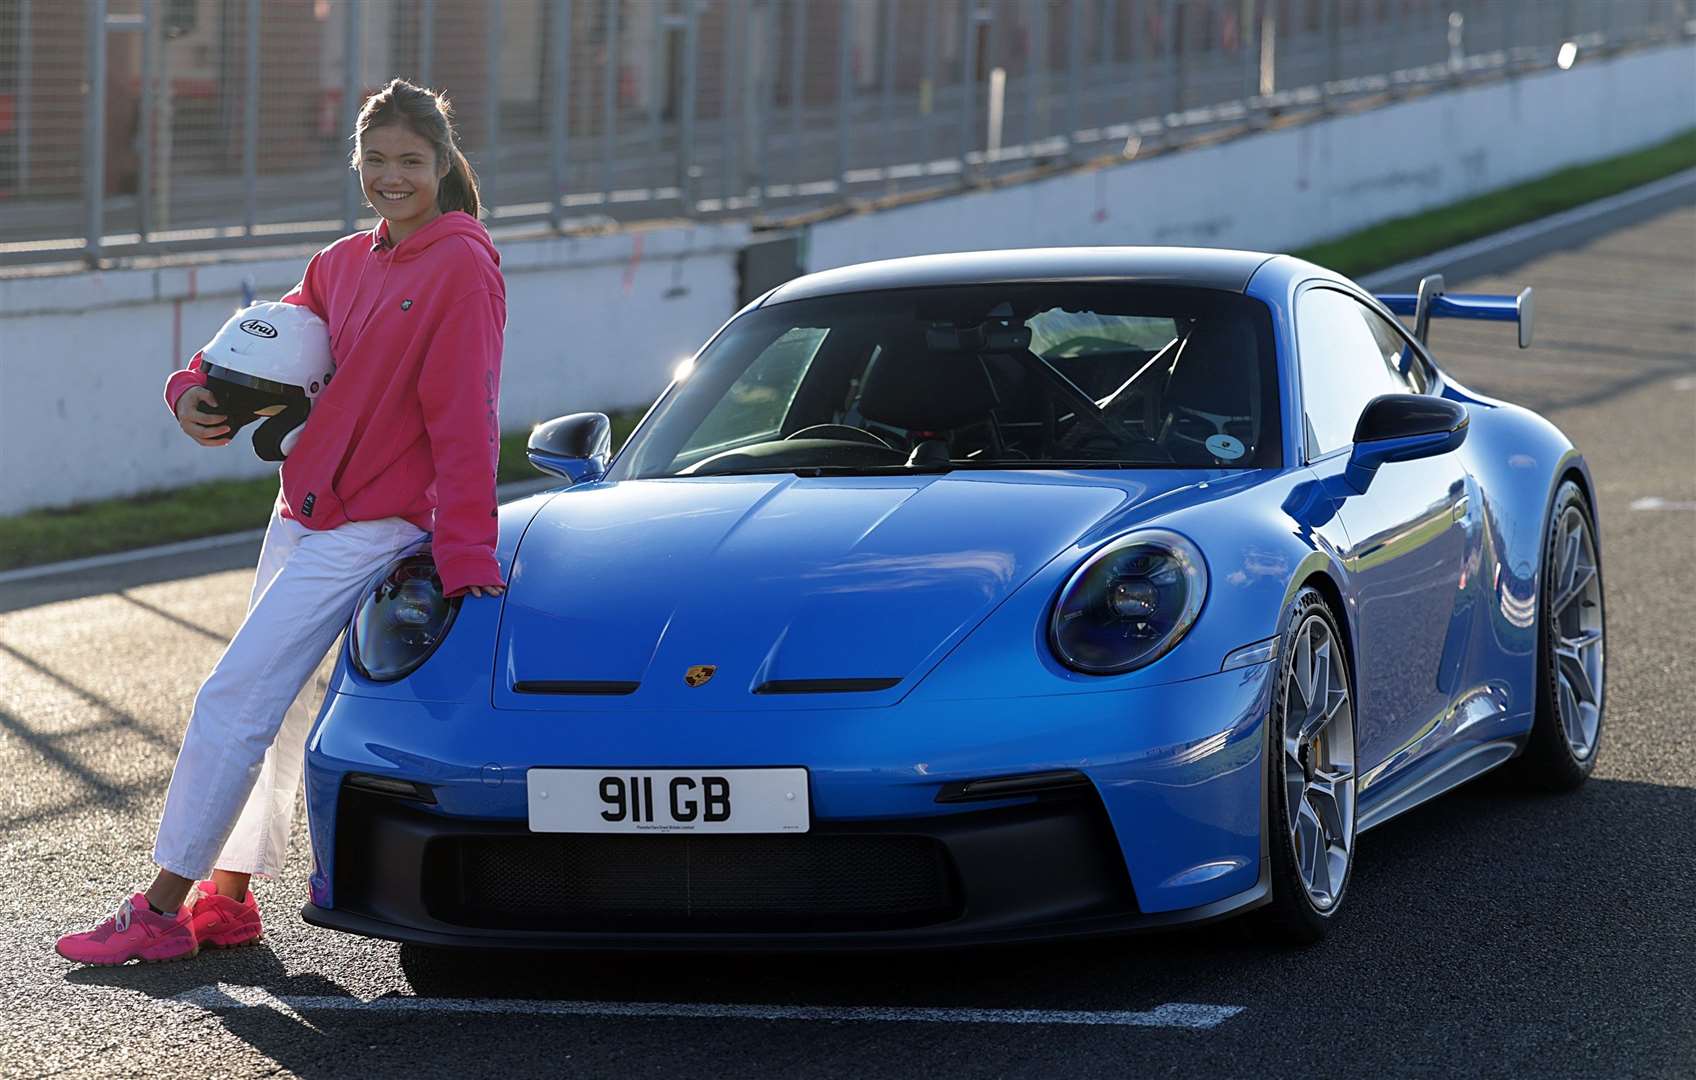 Orpington tennis player Emma Raducanu at Brands Hatch as part of her ambassador's role with Porsche. Picture: Porsche AG